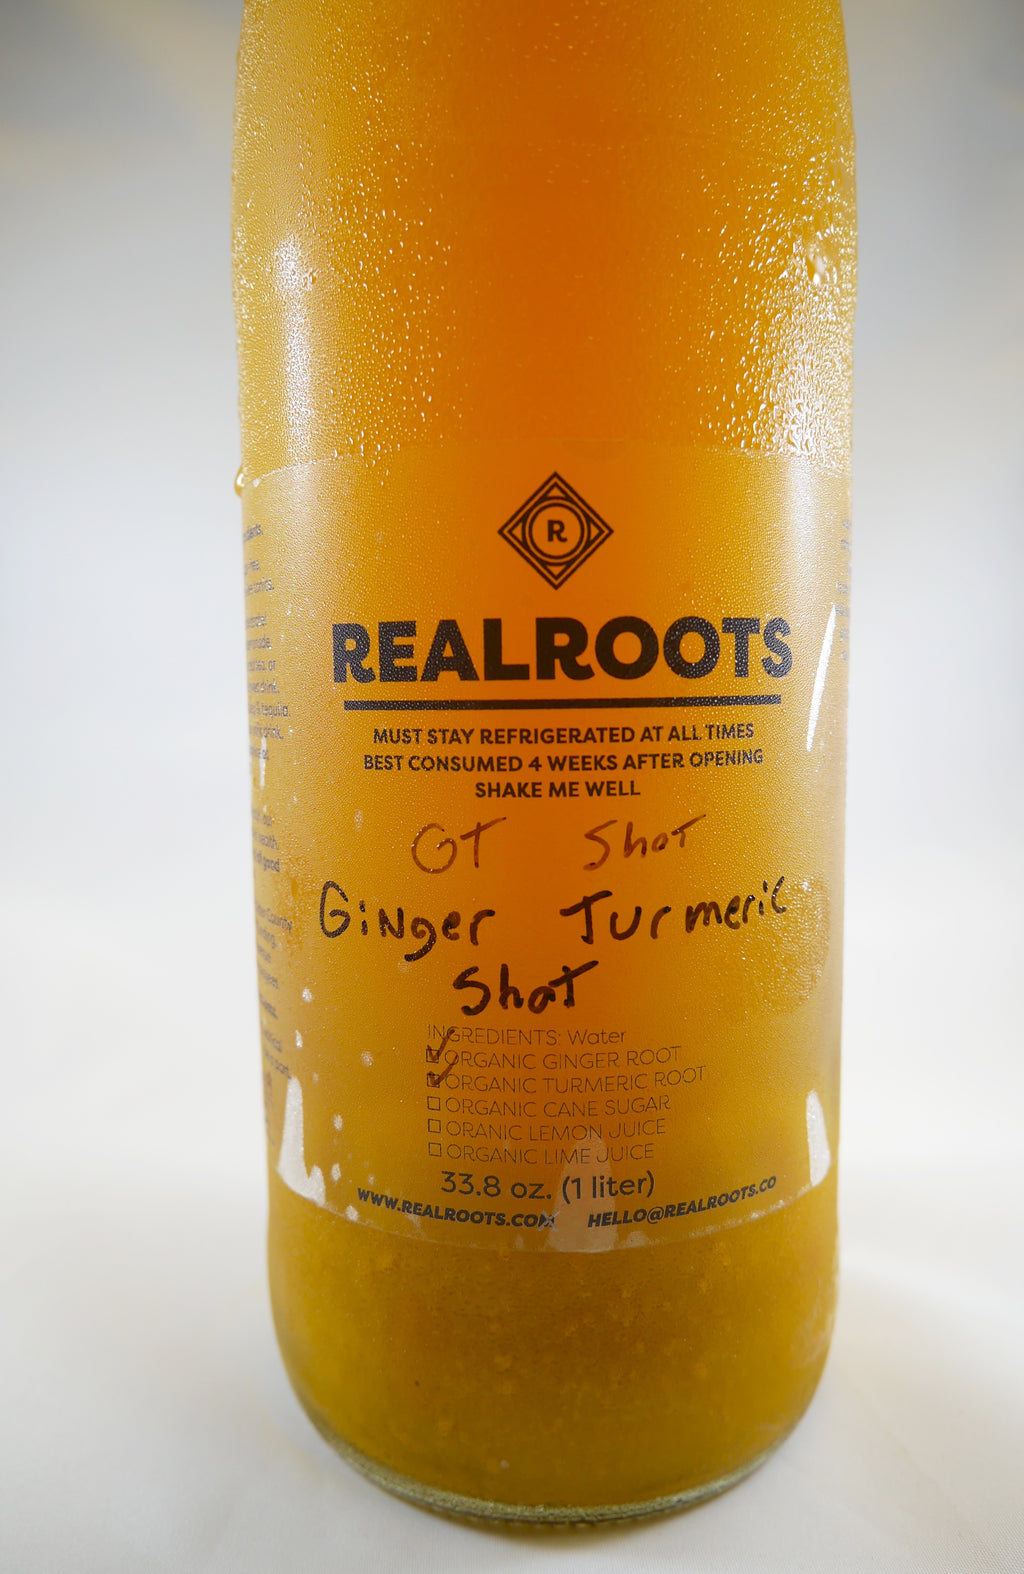 Real Roots Ginger Turmeric Shot